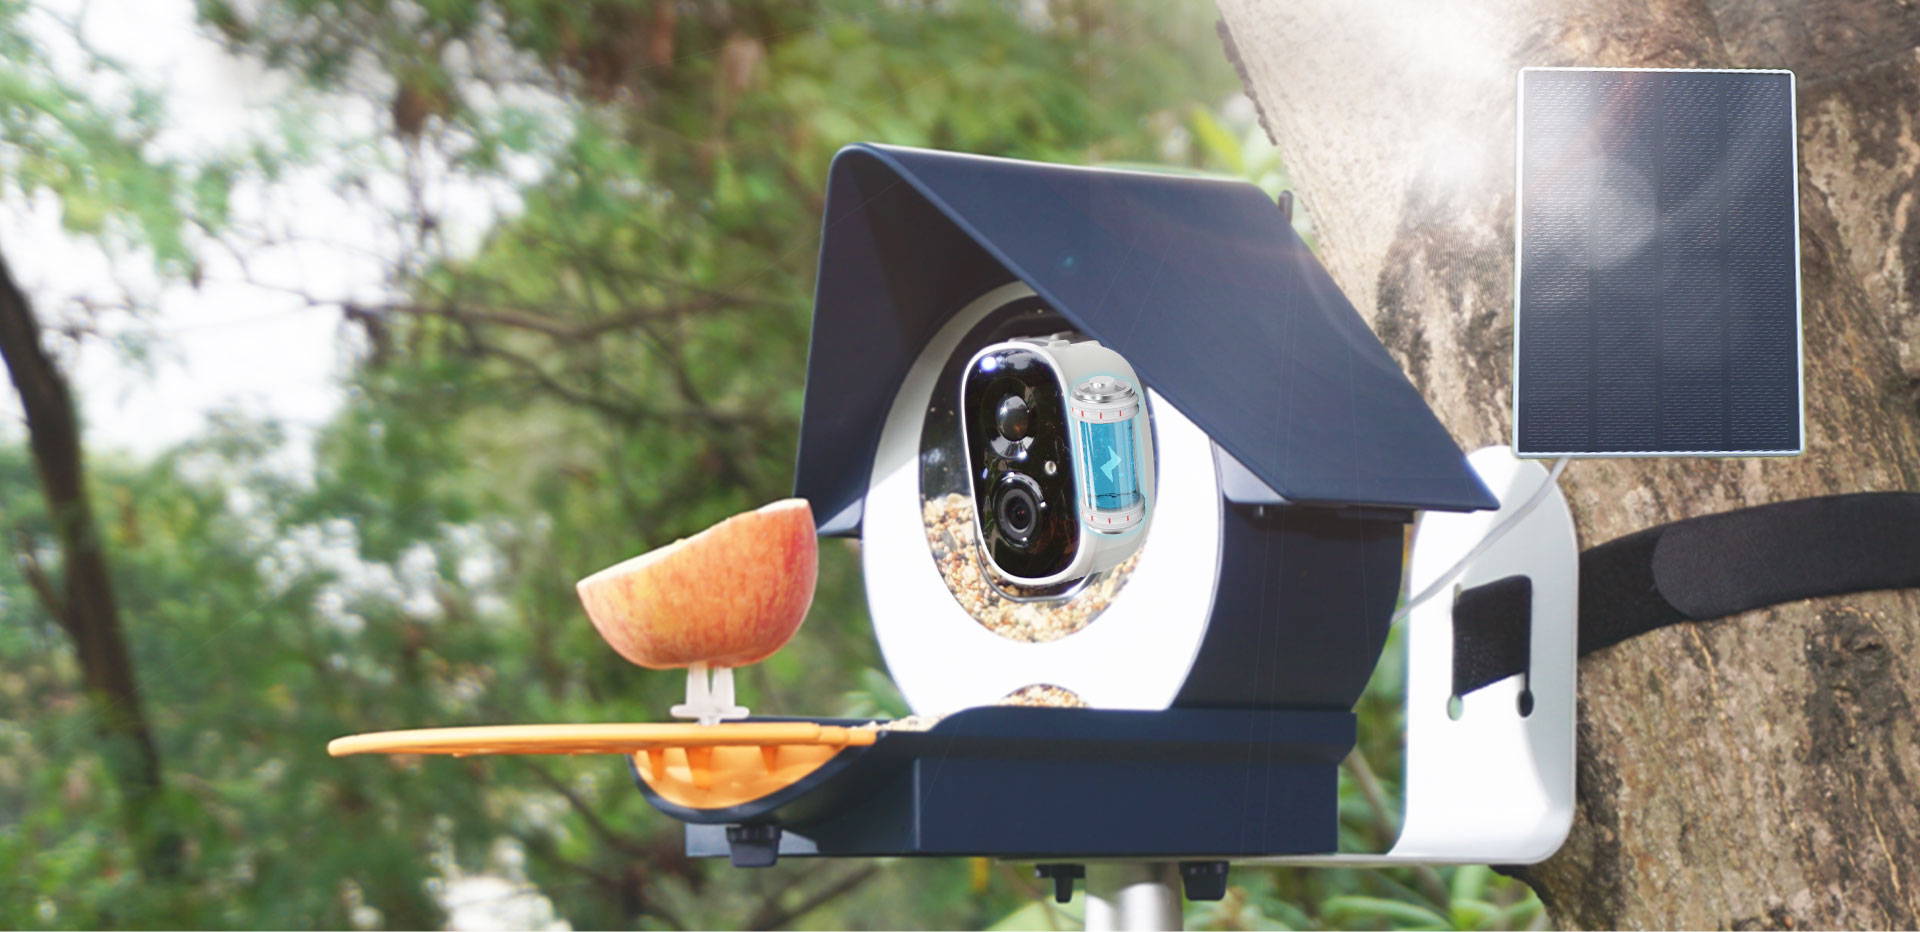 Eco-Friendly Bird Feeding with Solar-Powered Birdkiss Smart Feeder Mounted on a Tree